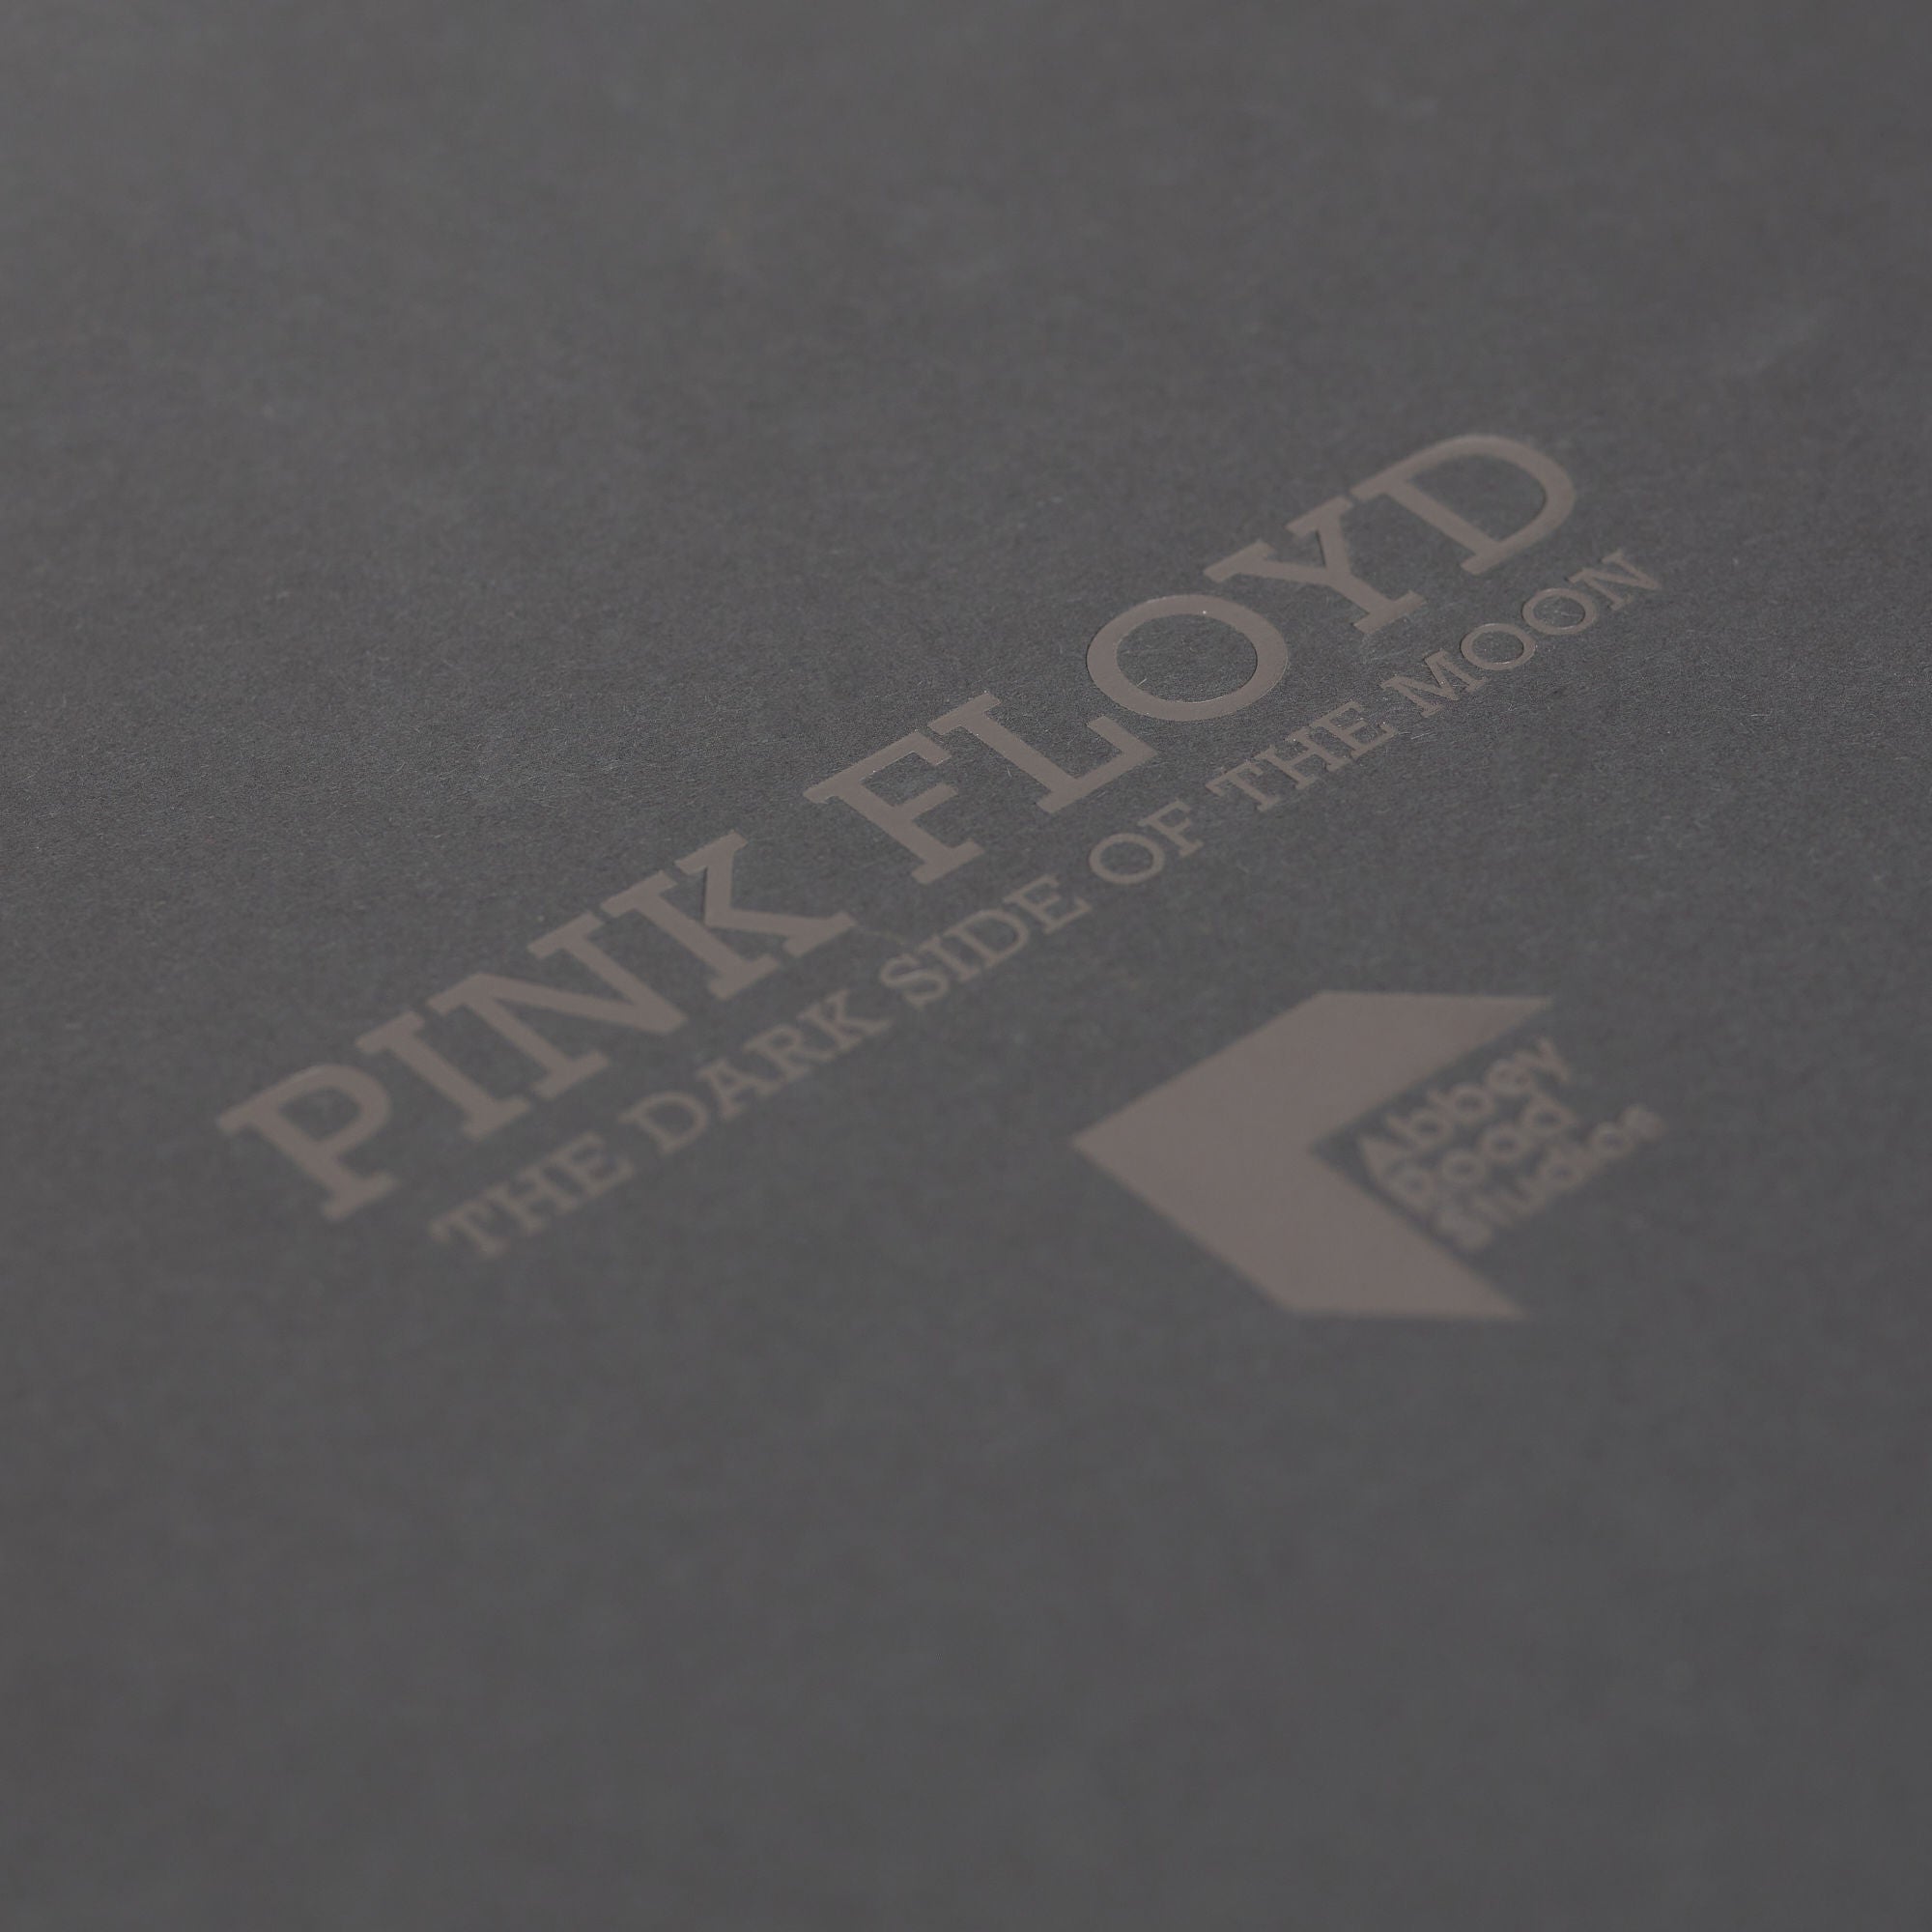 Abbey Road Studios - Pink Floyd The Dark Side of the Moon EMI Tape Box Folio - Side Two